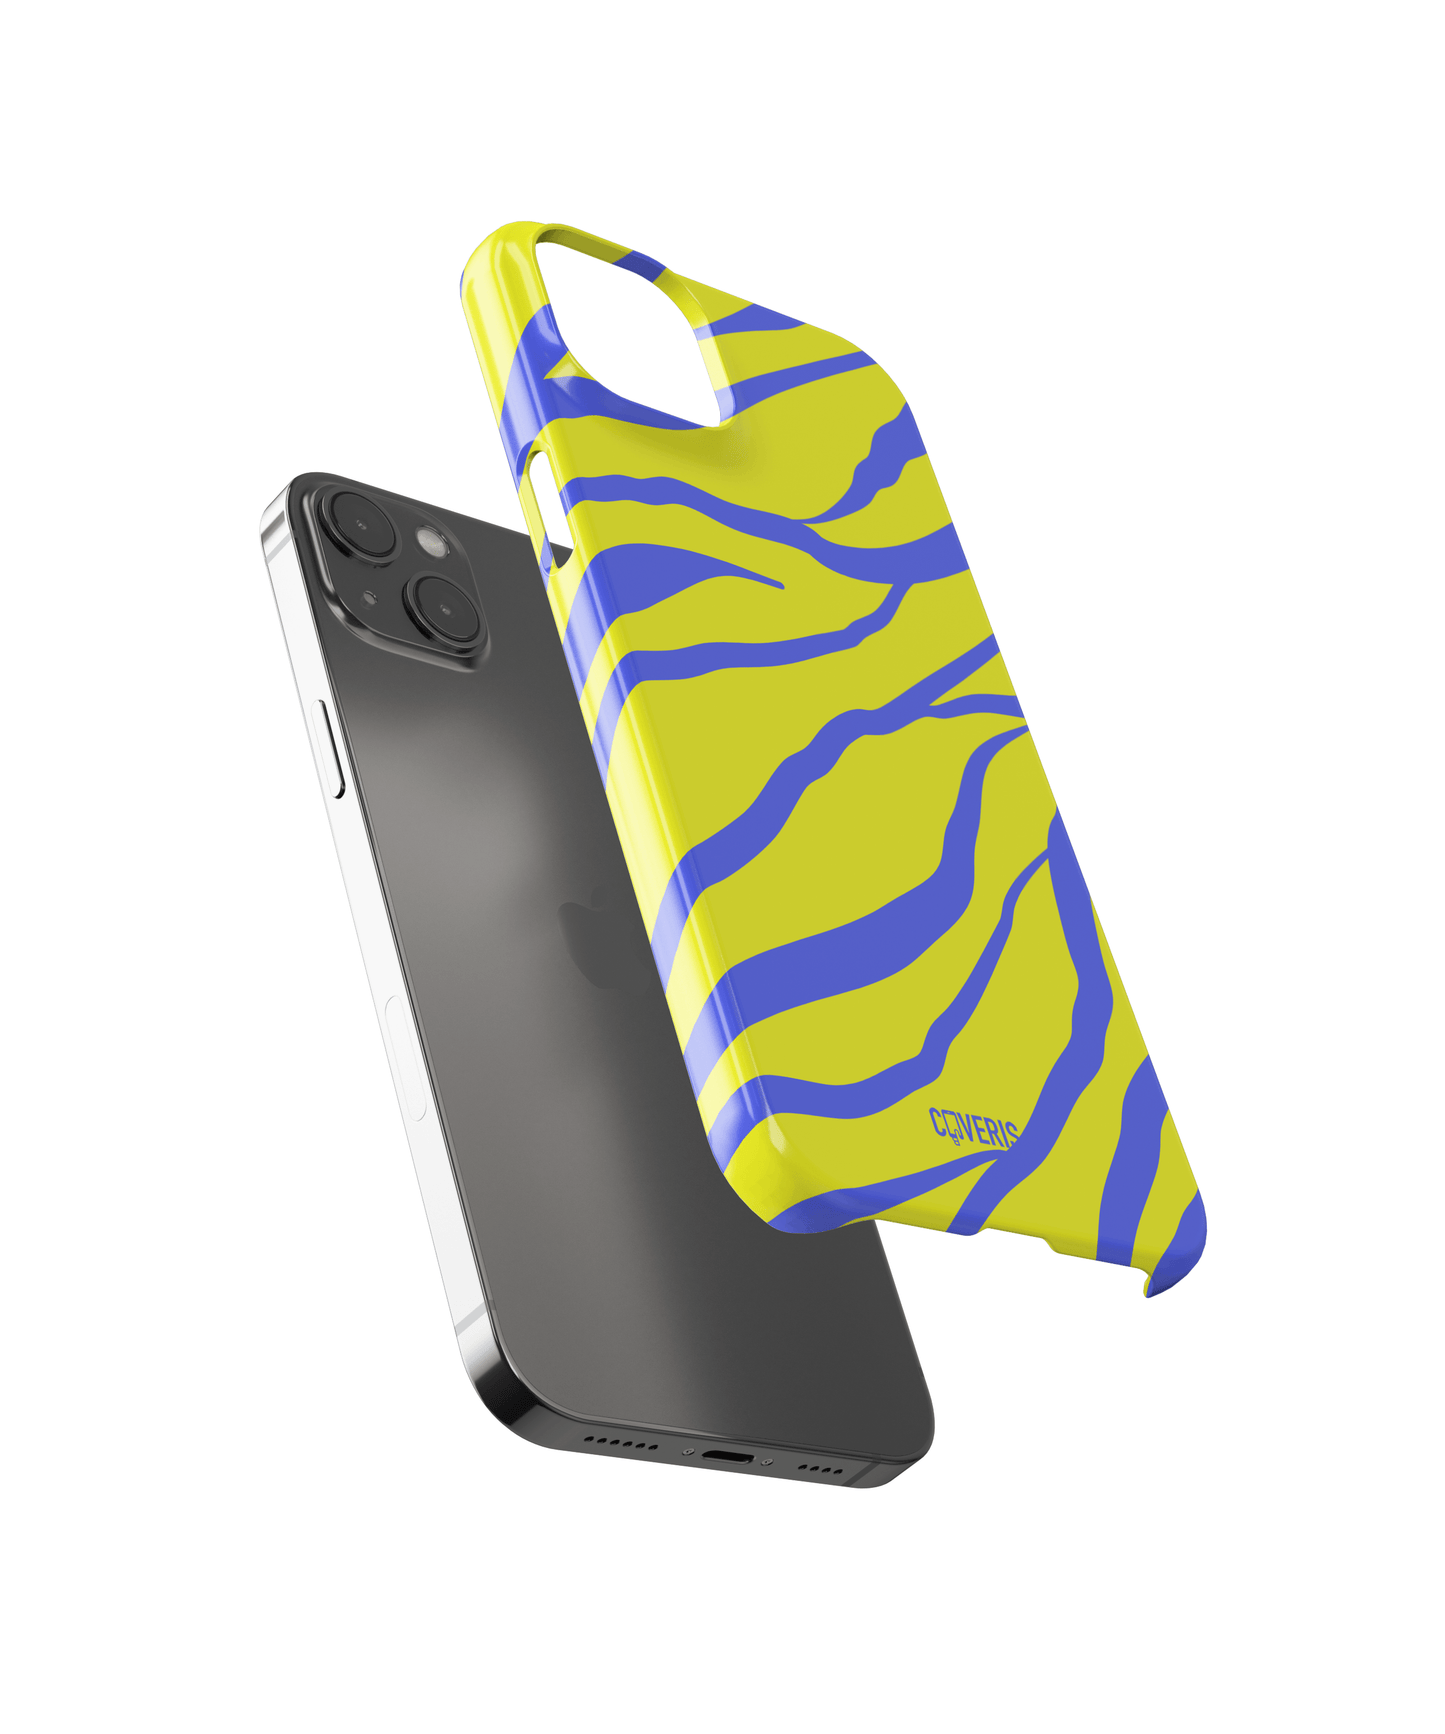 Neonique - Samsung Galaxy S9 Plus phone case